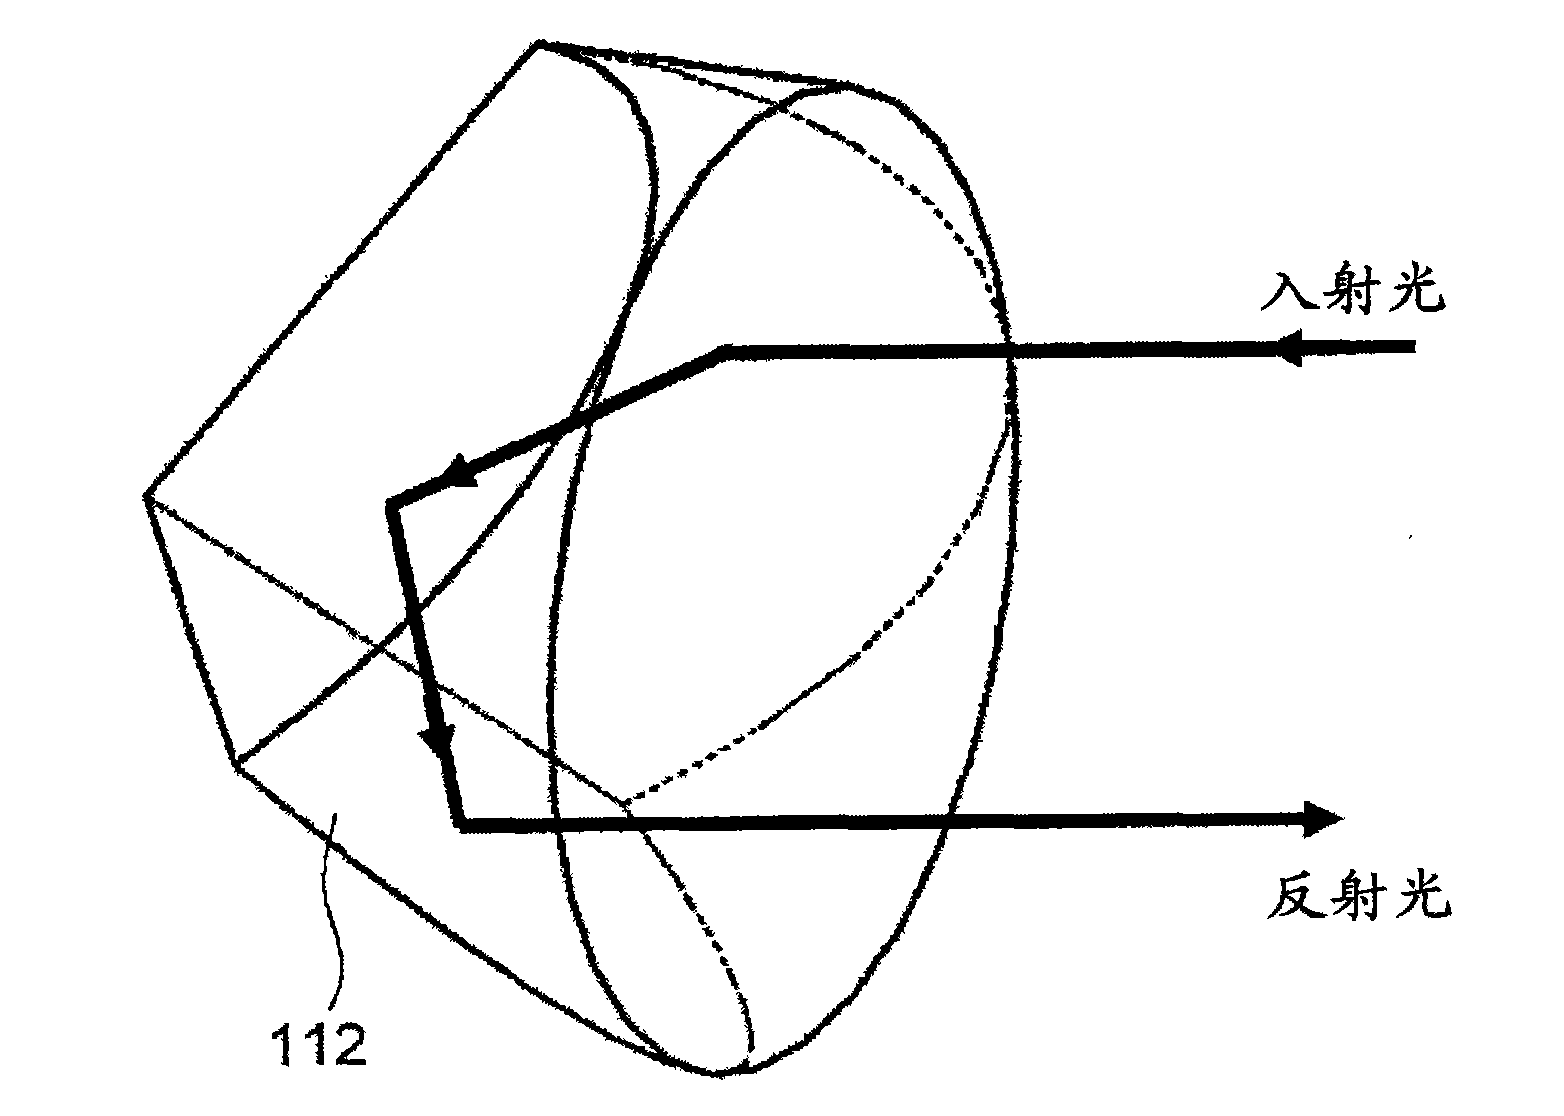 Optical head and optical disc apparatus